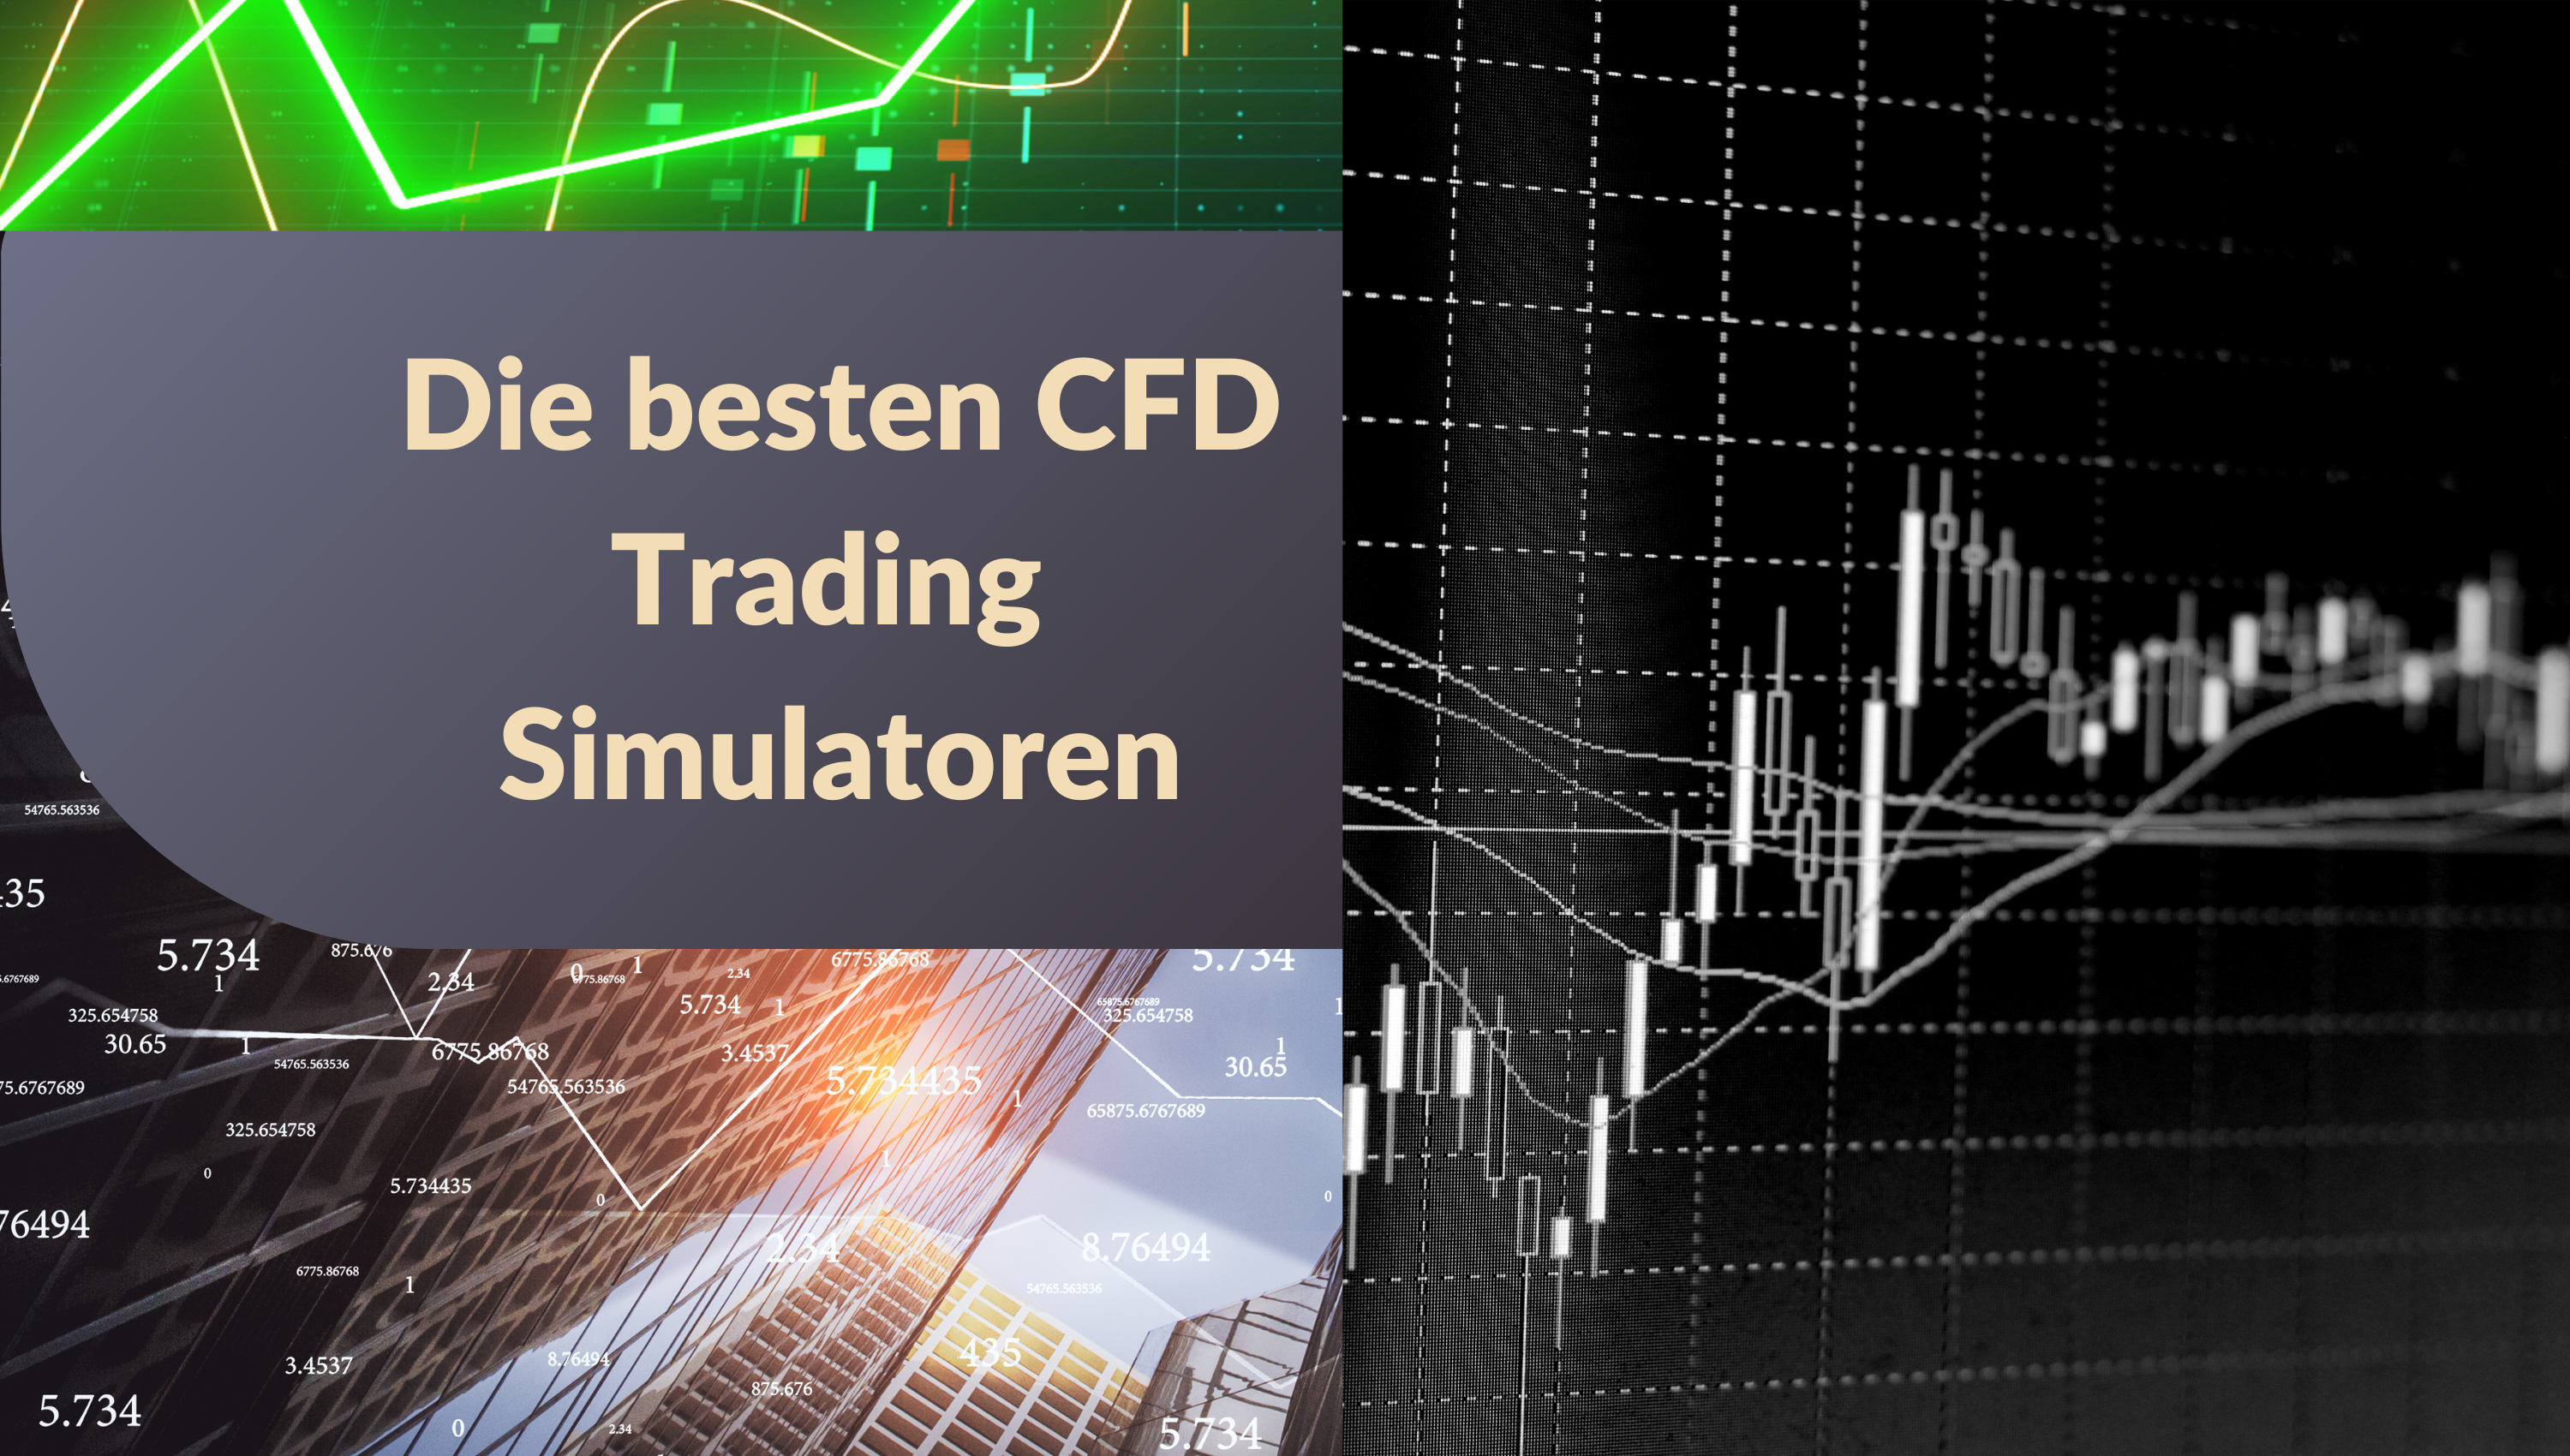 Die besten CFD Trading Simulatoren